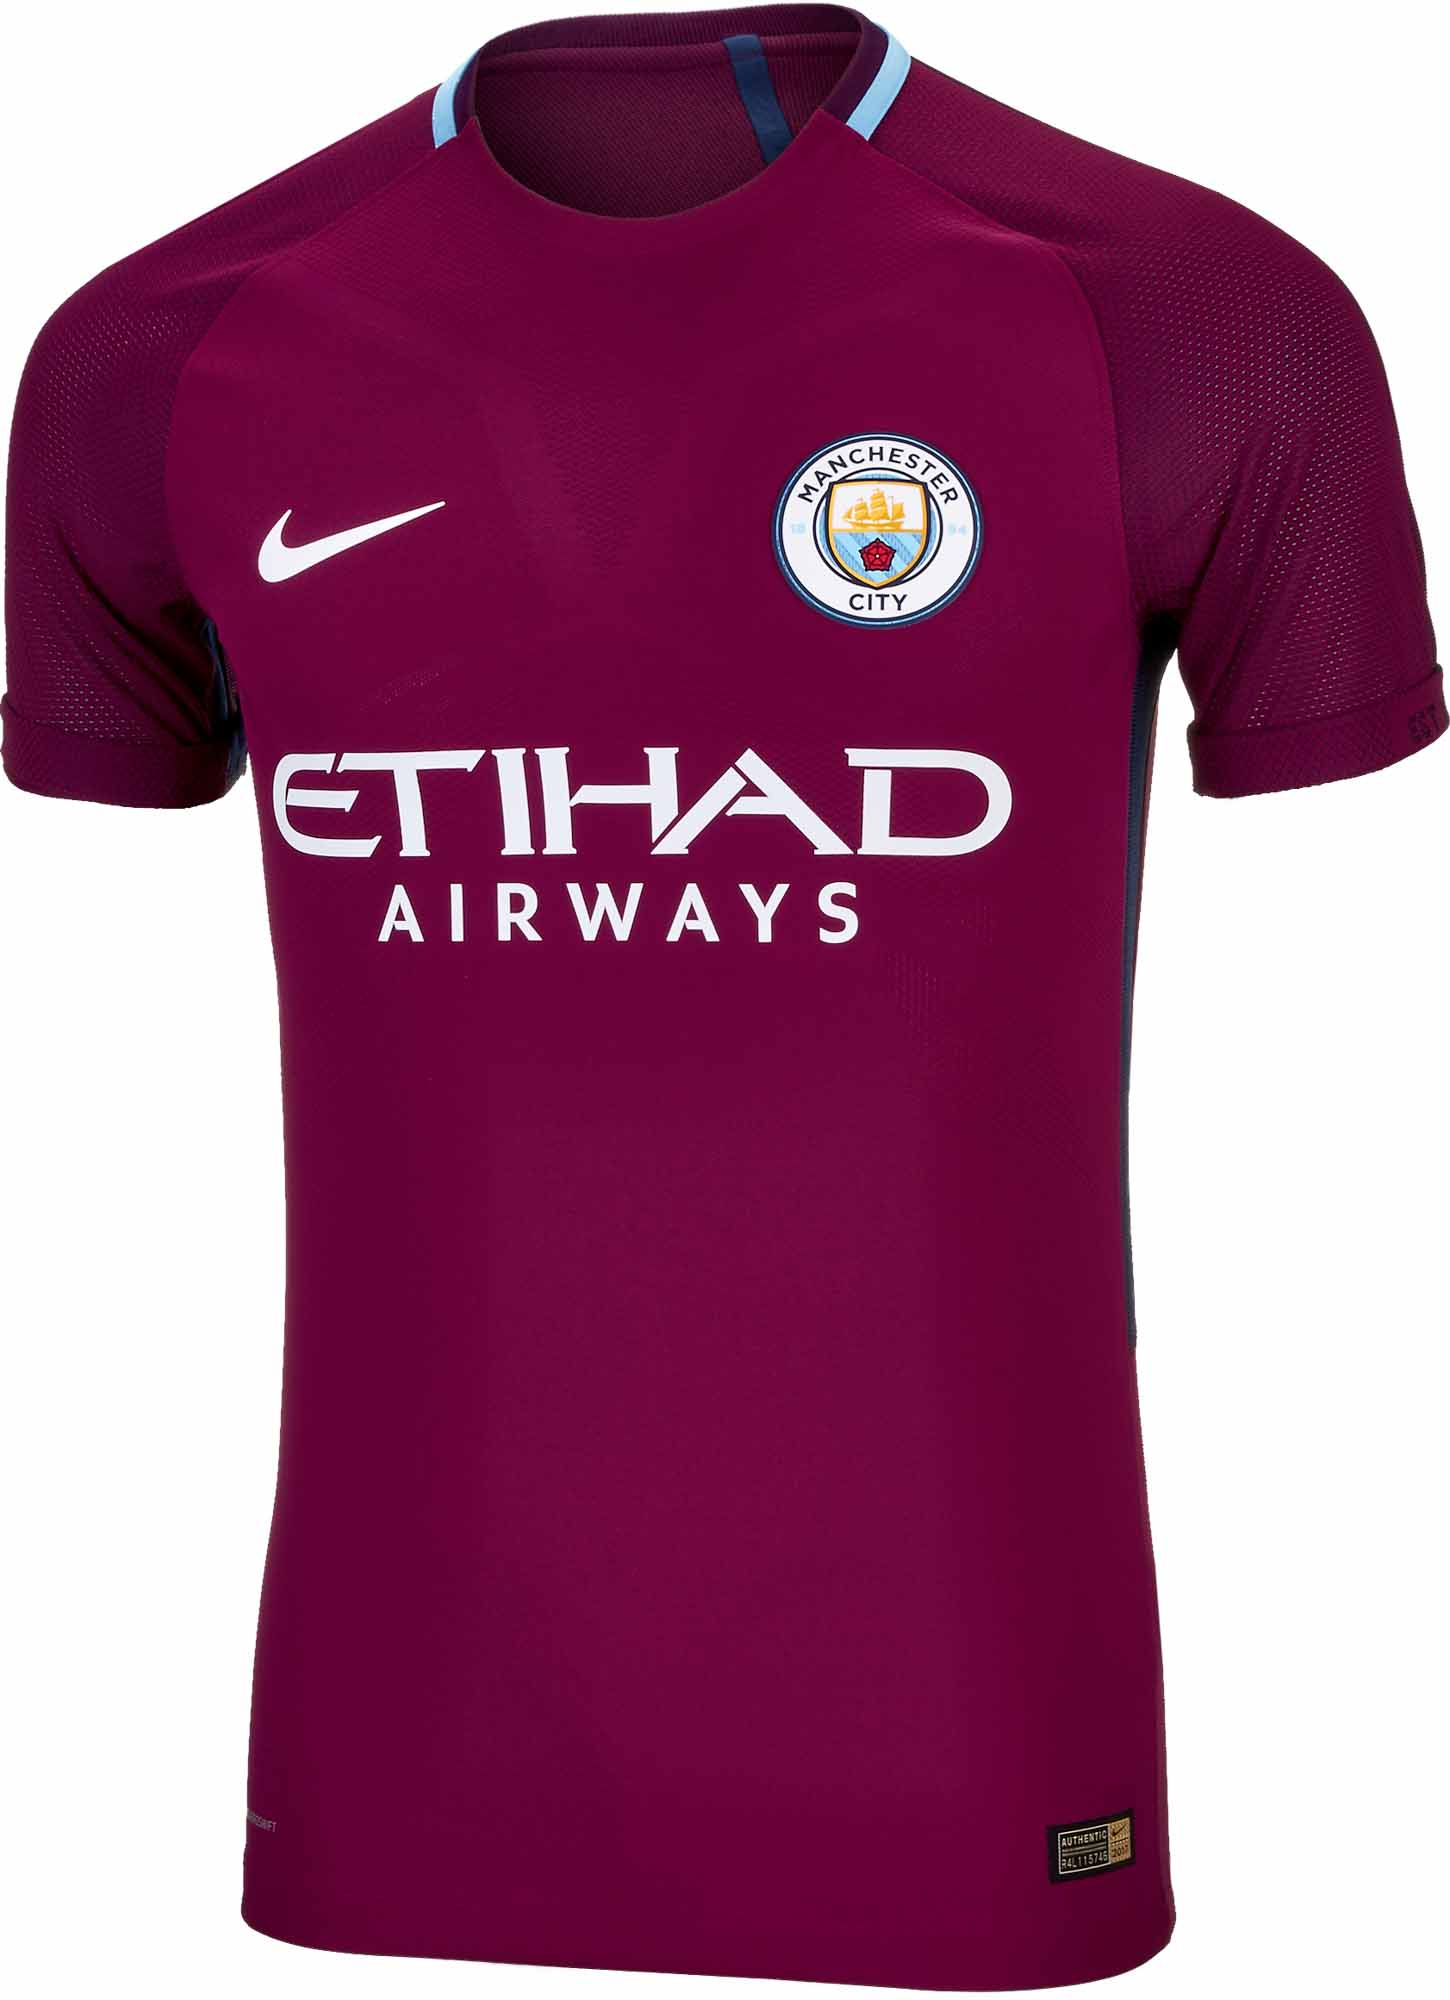 Nike Manchester City Away Match Jersey 2017/18